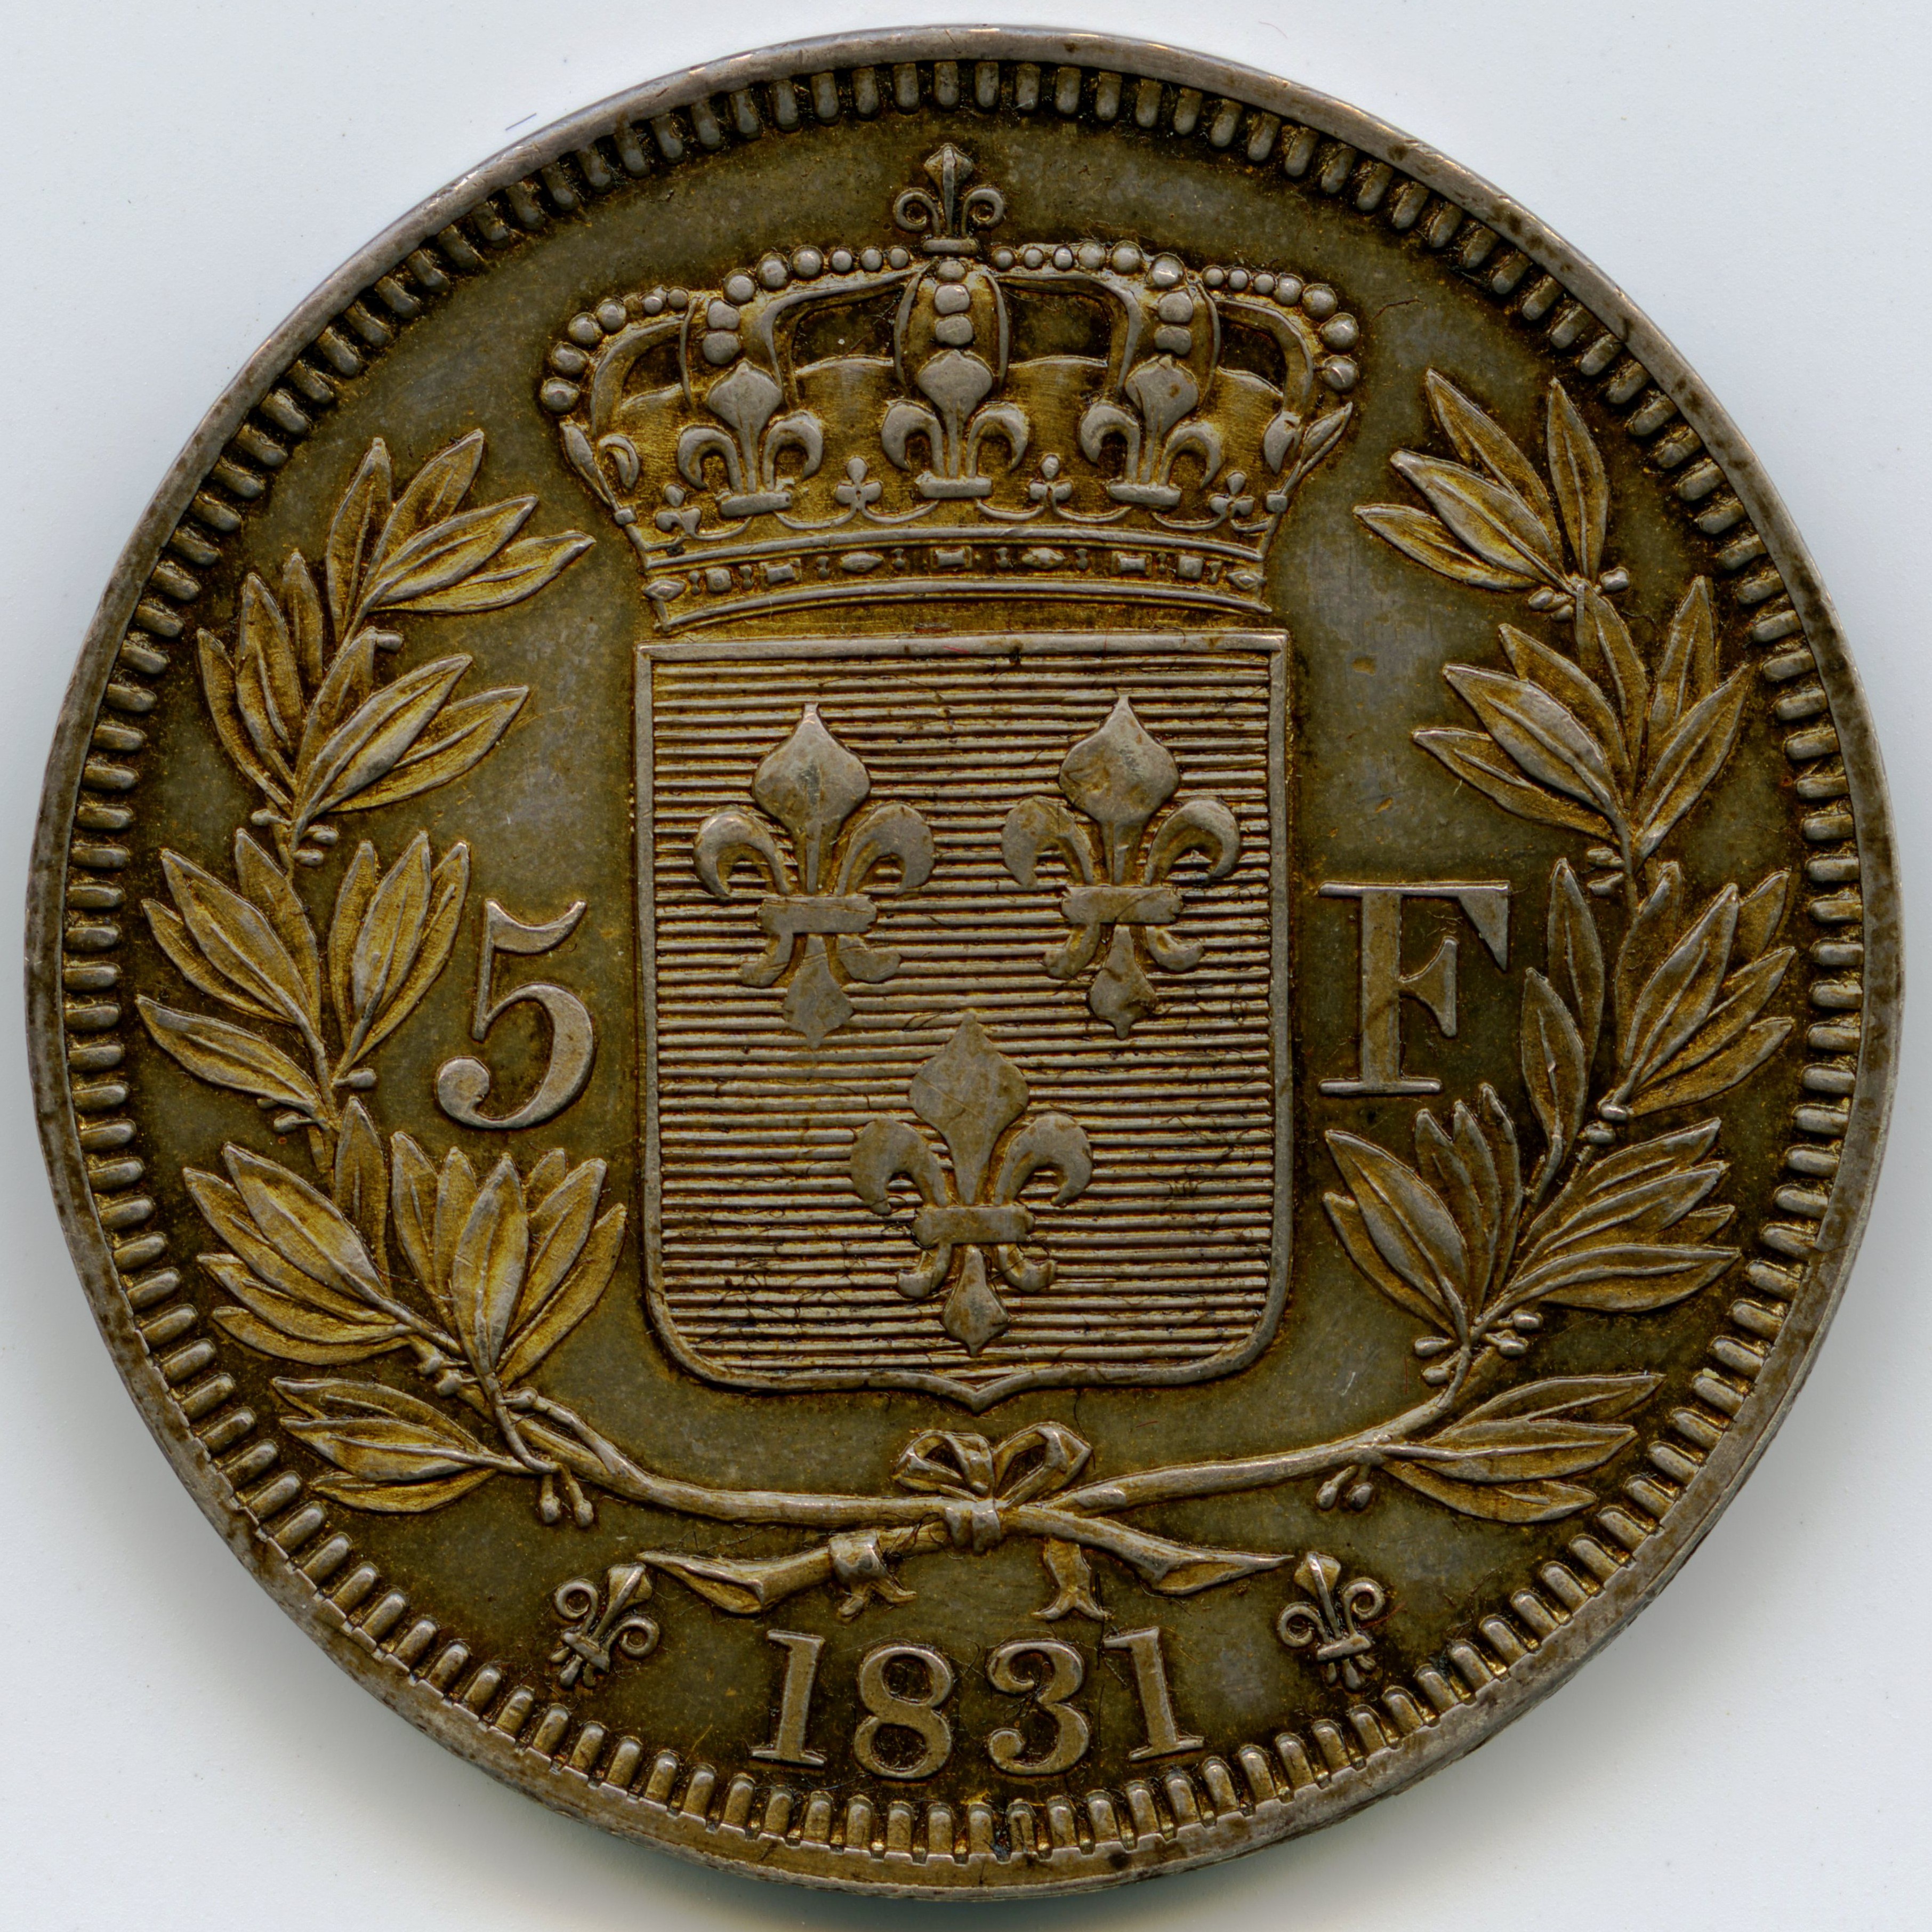 Henvi V - 5 Francs - 1831 revers